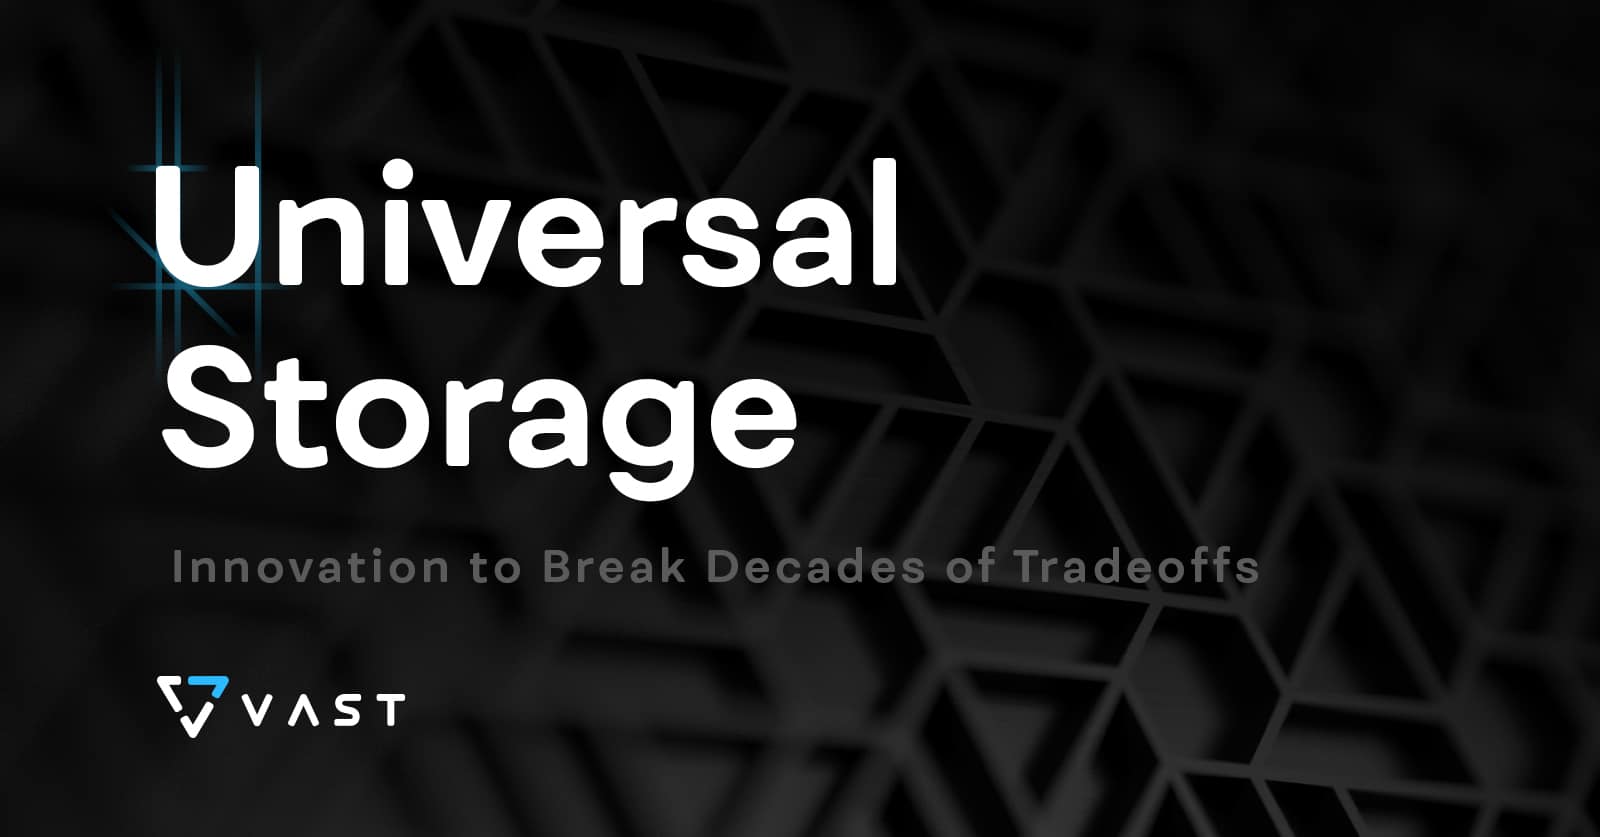 Universal Storage Overview